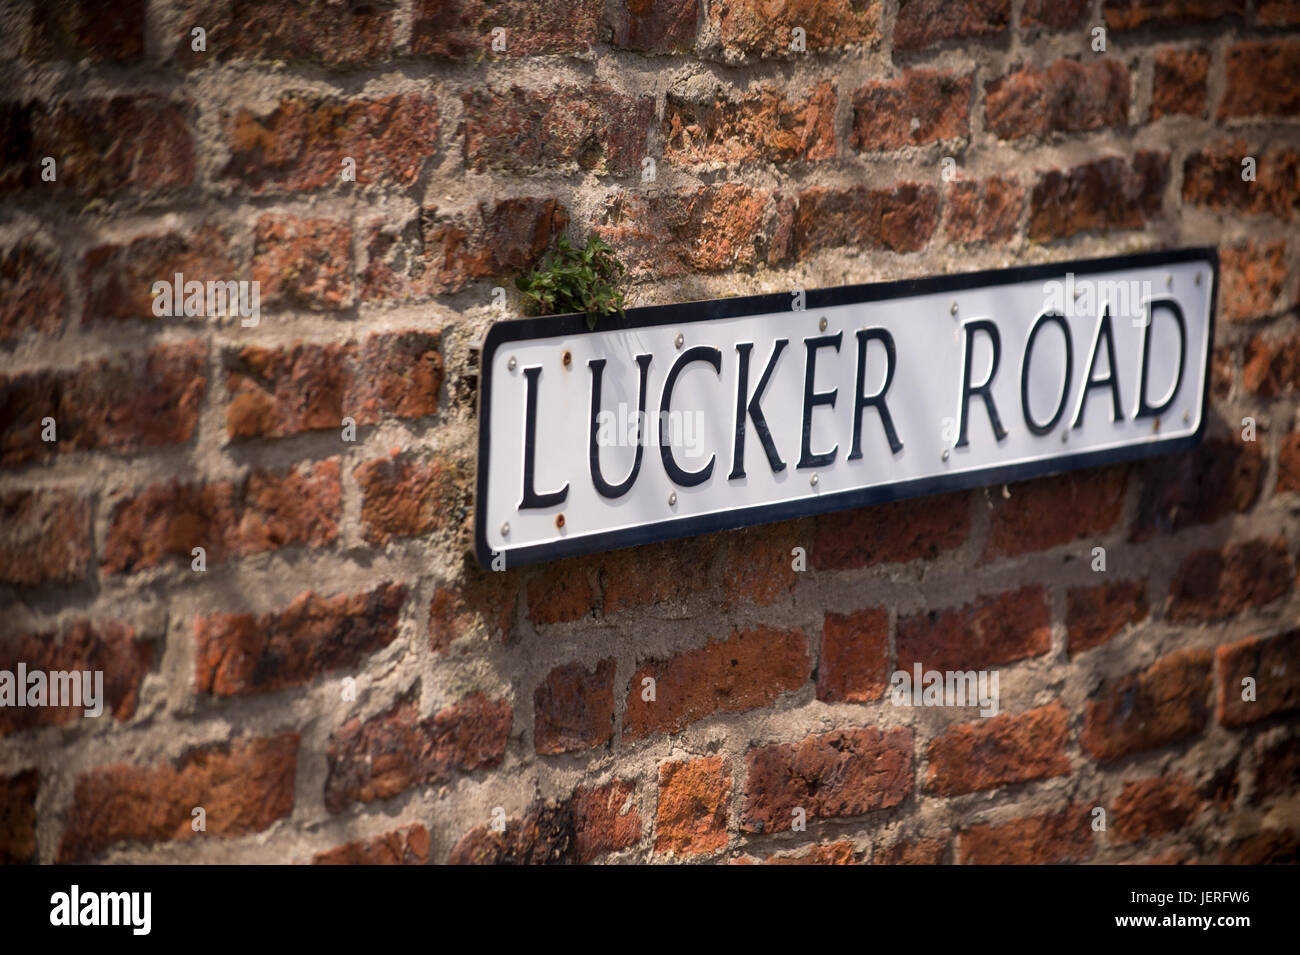 Lucker Road street sign, Bamburgh, Northumberland Stock Photo